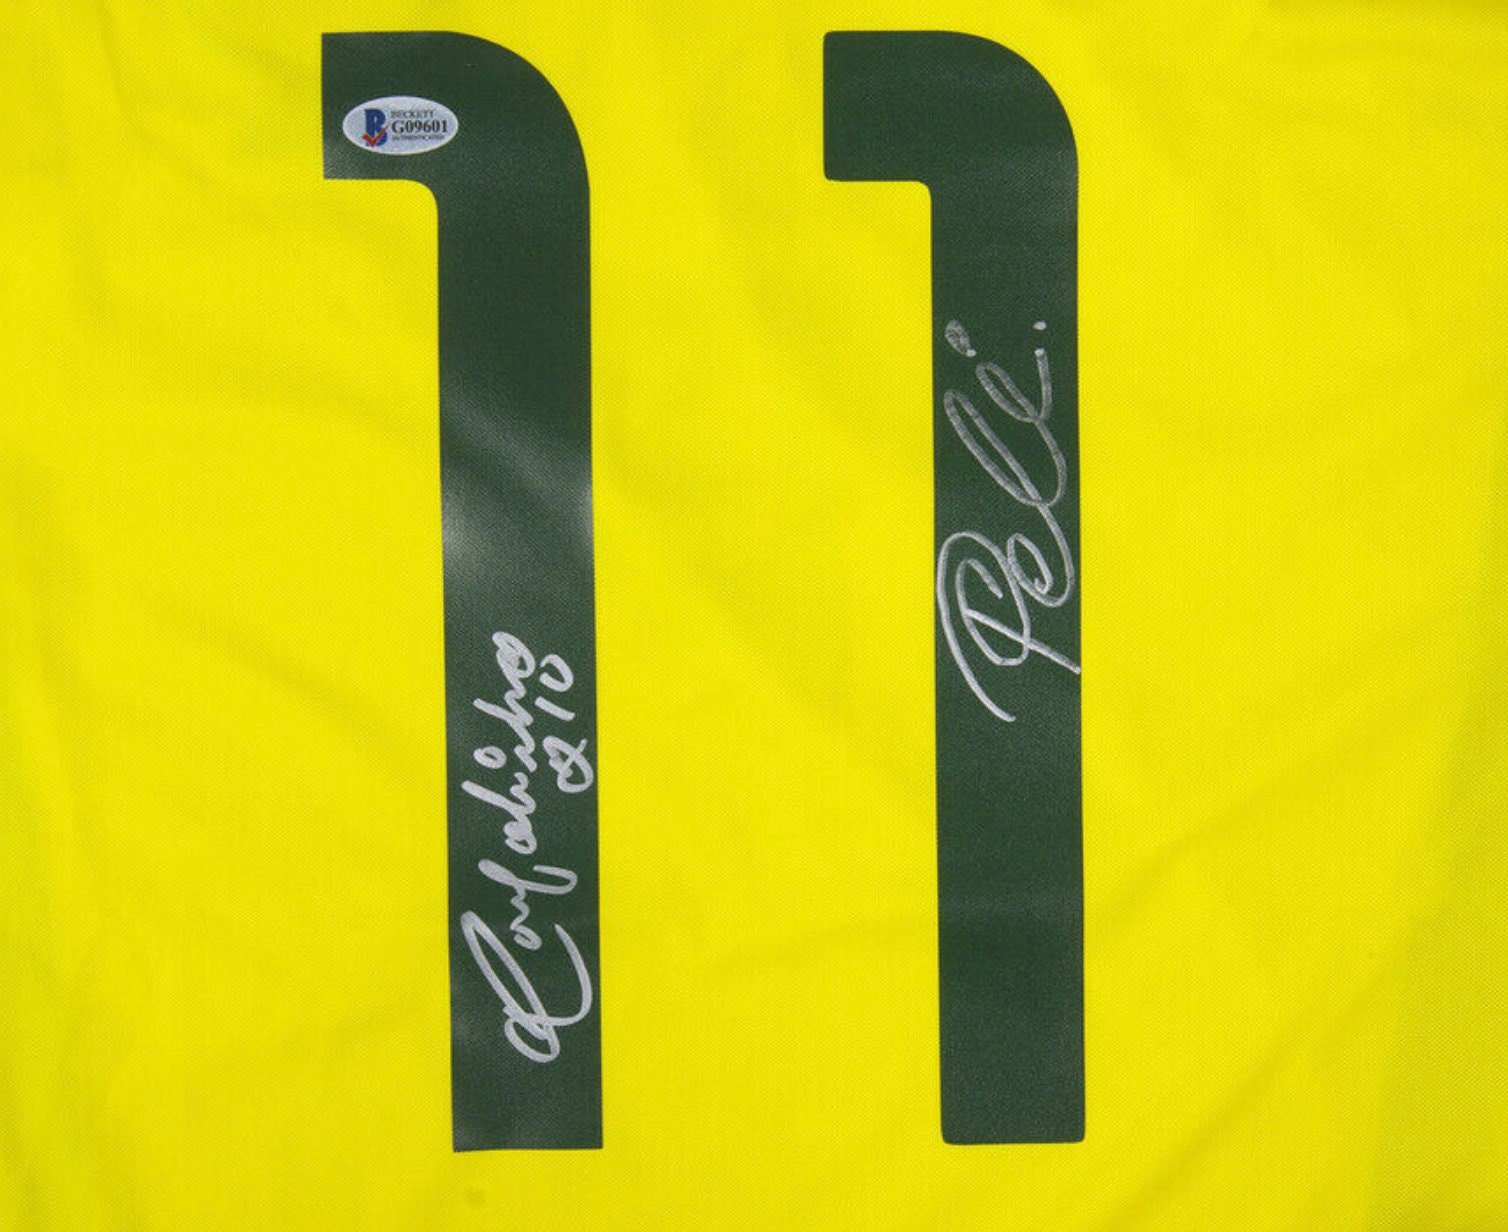 Ronaldinho Autographed AC Milan Jersey BAS COA Signed Brazil